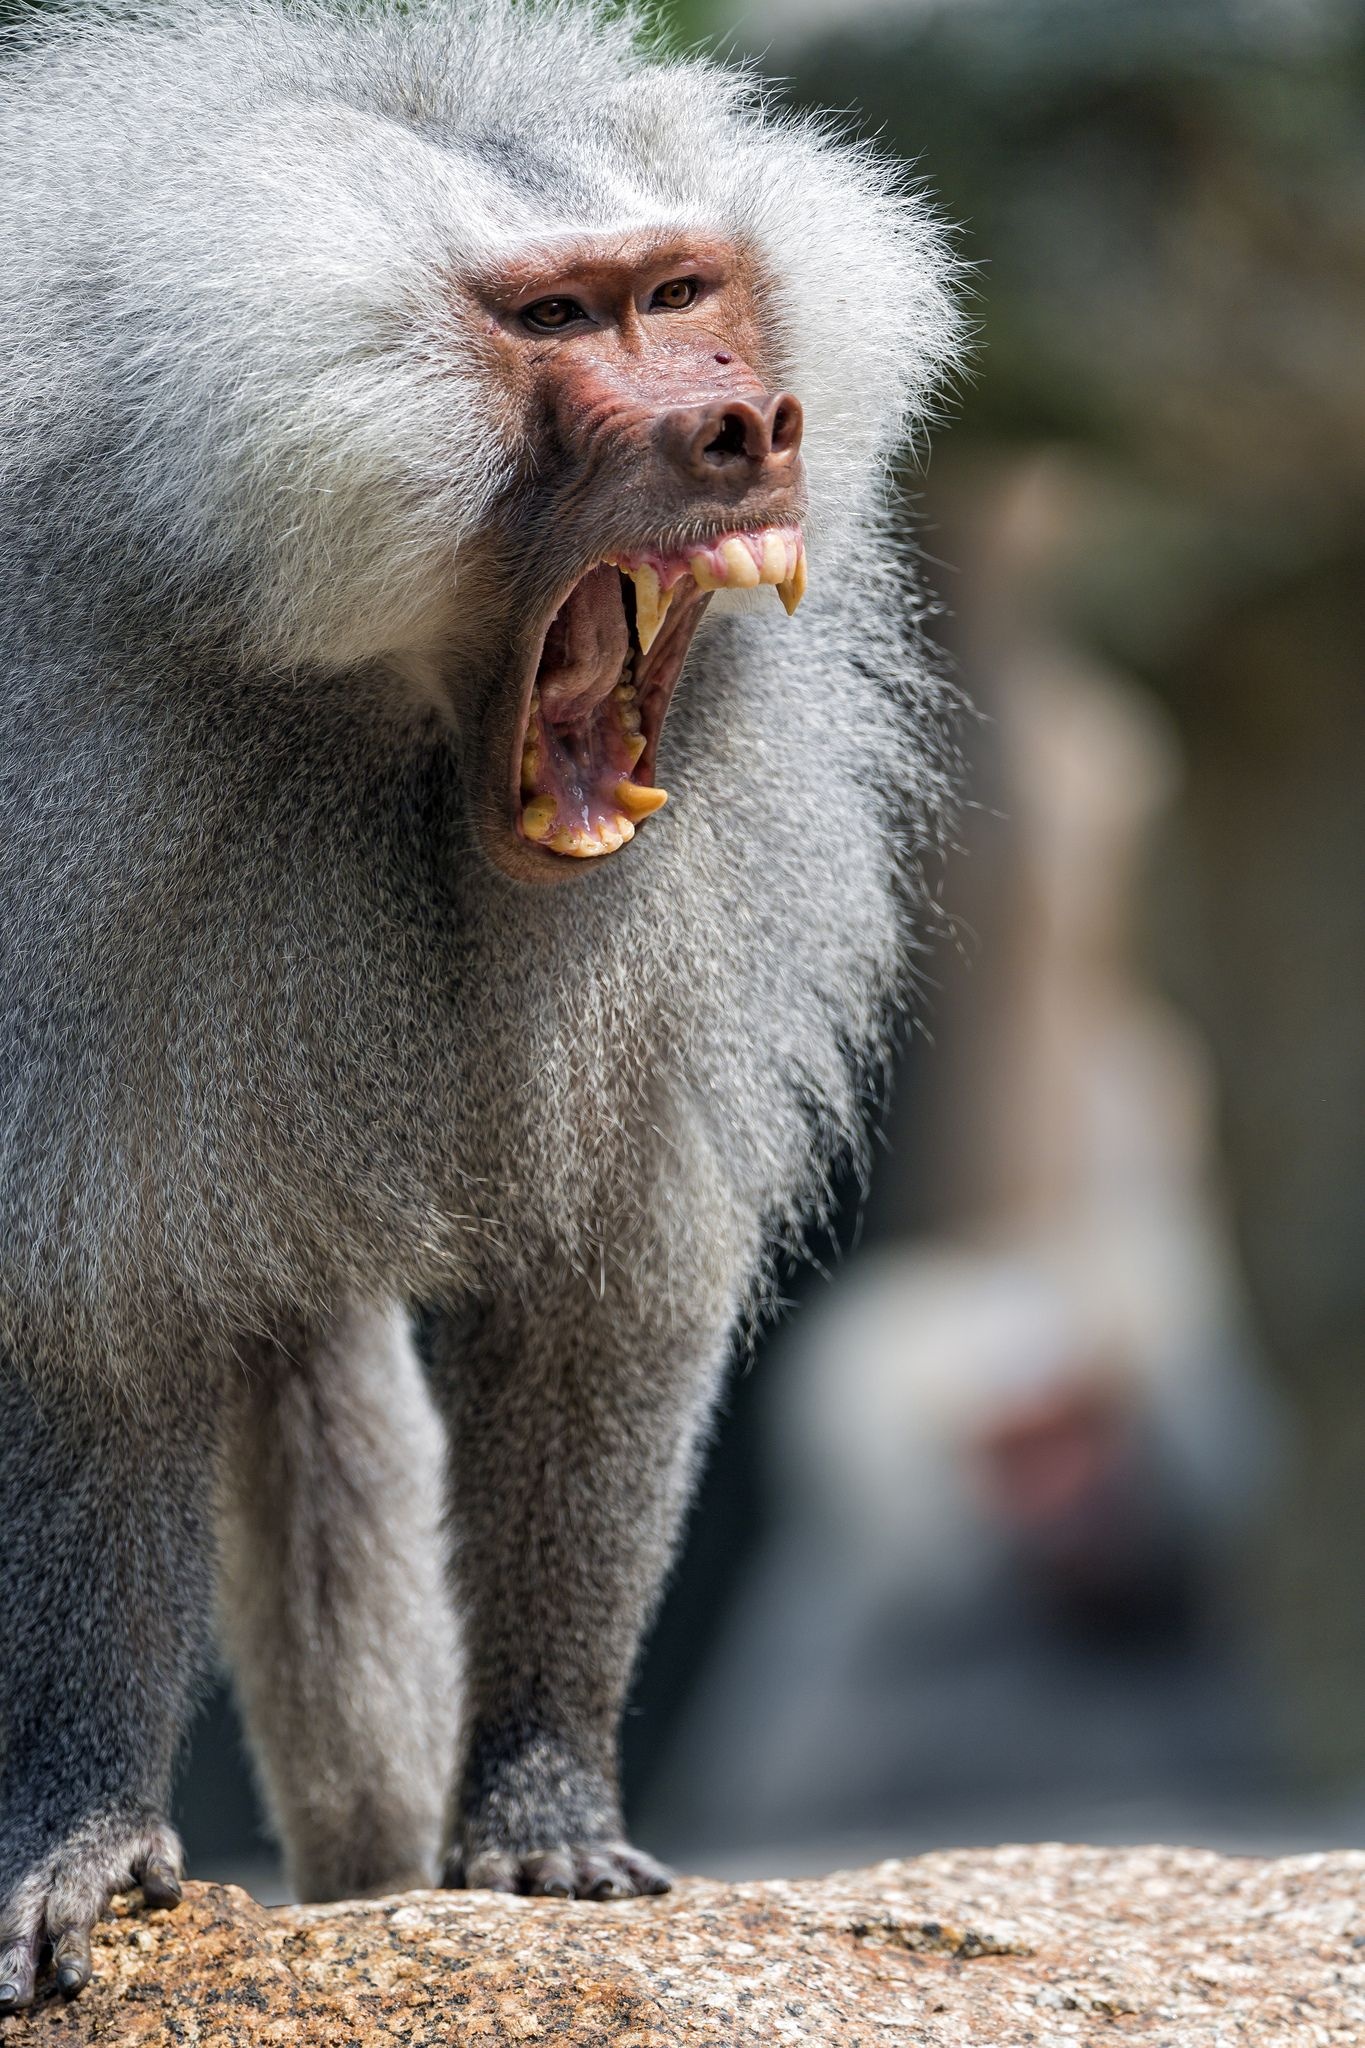 Yawning baboon, Noah's Ark animals, Animal Planet shot, Primate behavior, 1370x2050 HD Handy